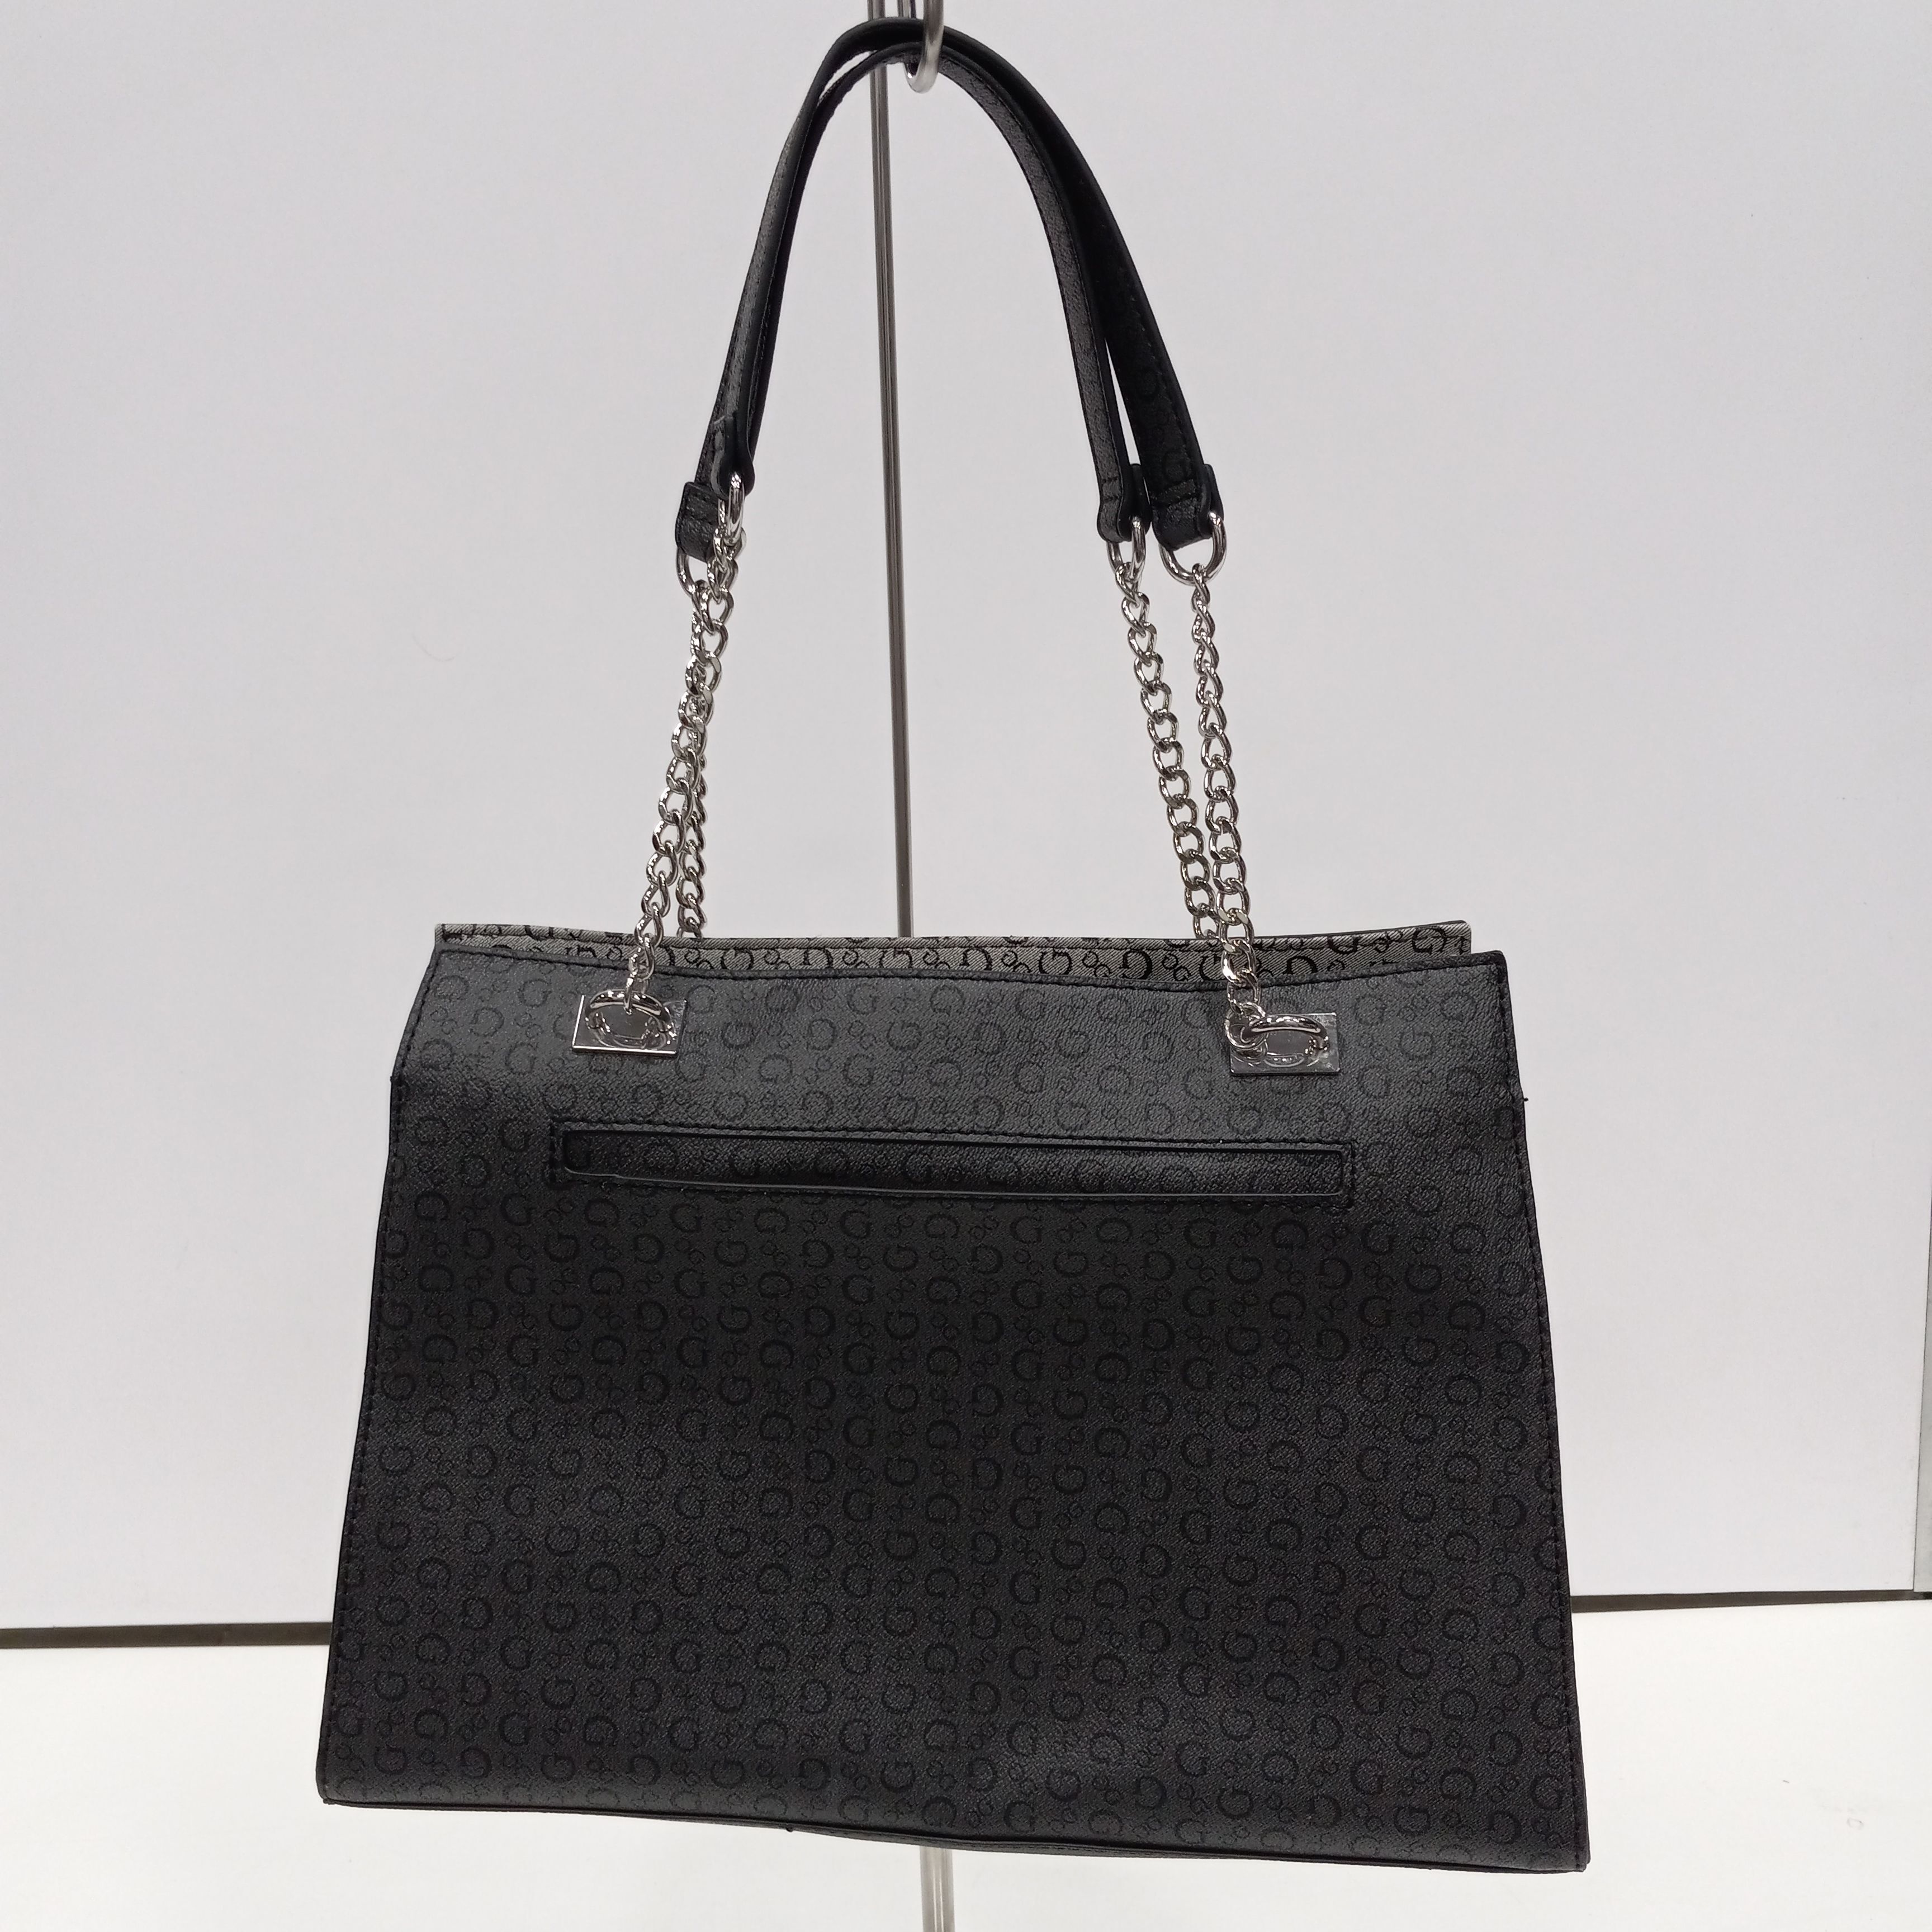 NEW Guess Women's Alopa Quilted Satchel Crossbody Bag Handbag - Black | eBay